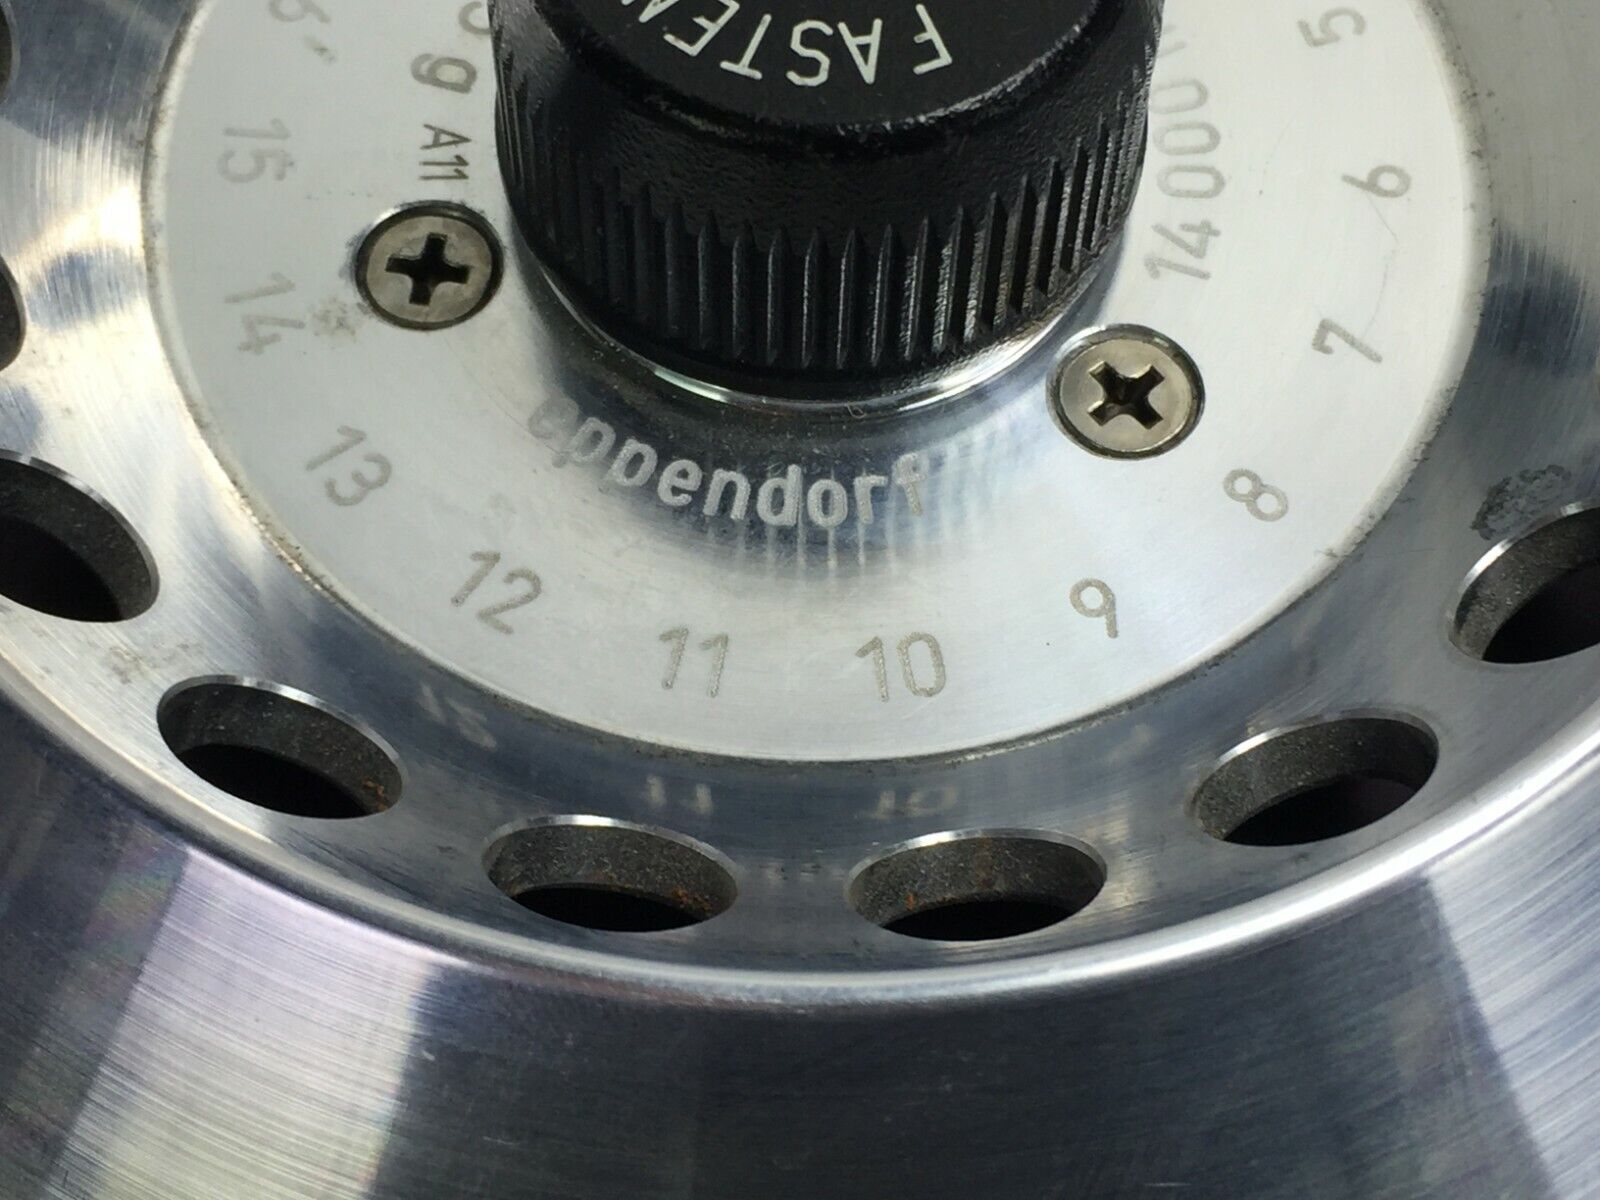 Eppendorf 18x3.5g 14000 min Centrifuge Rotor